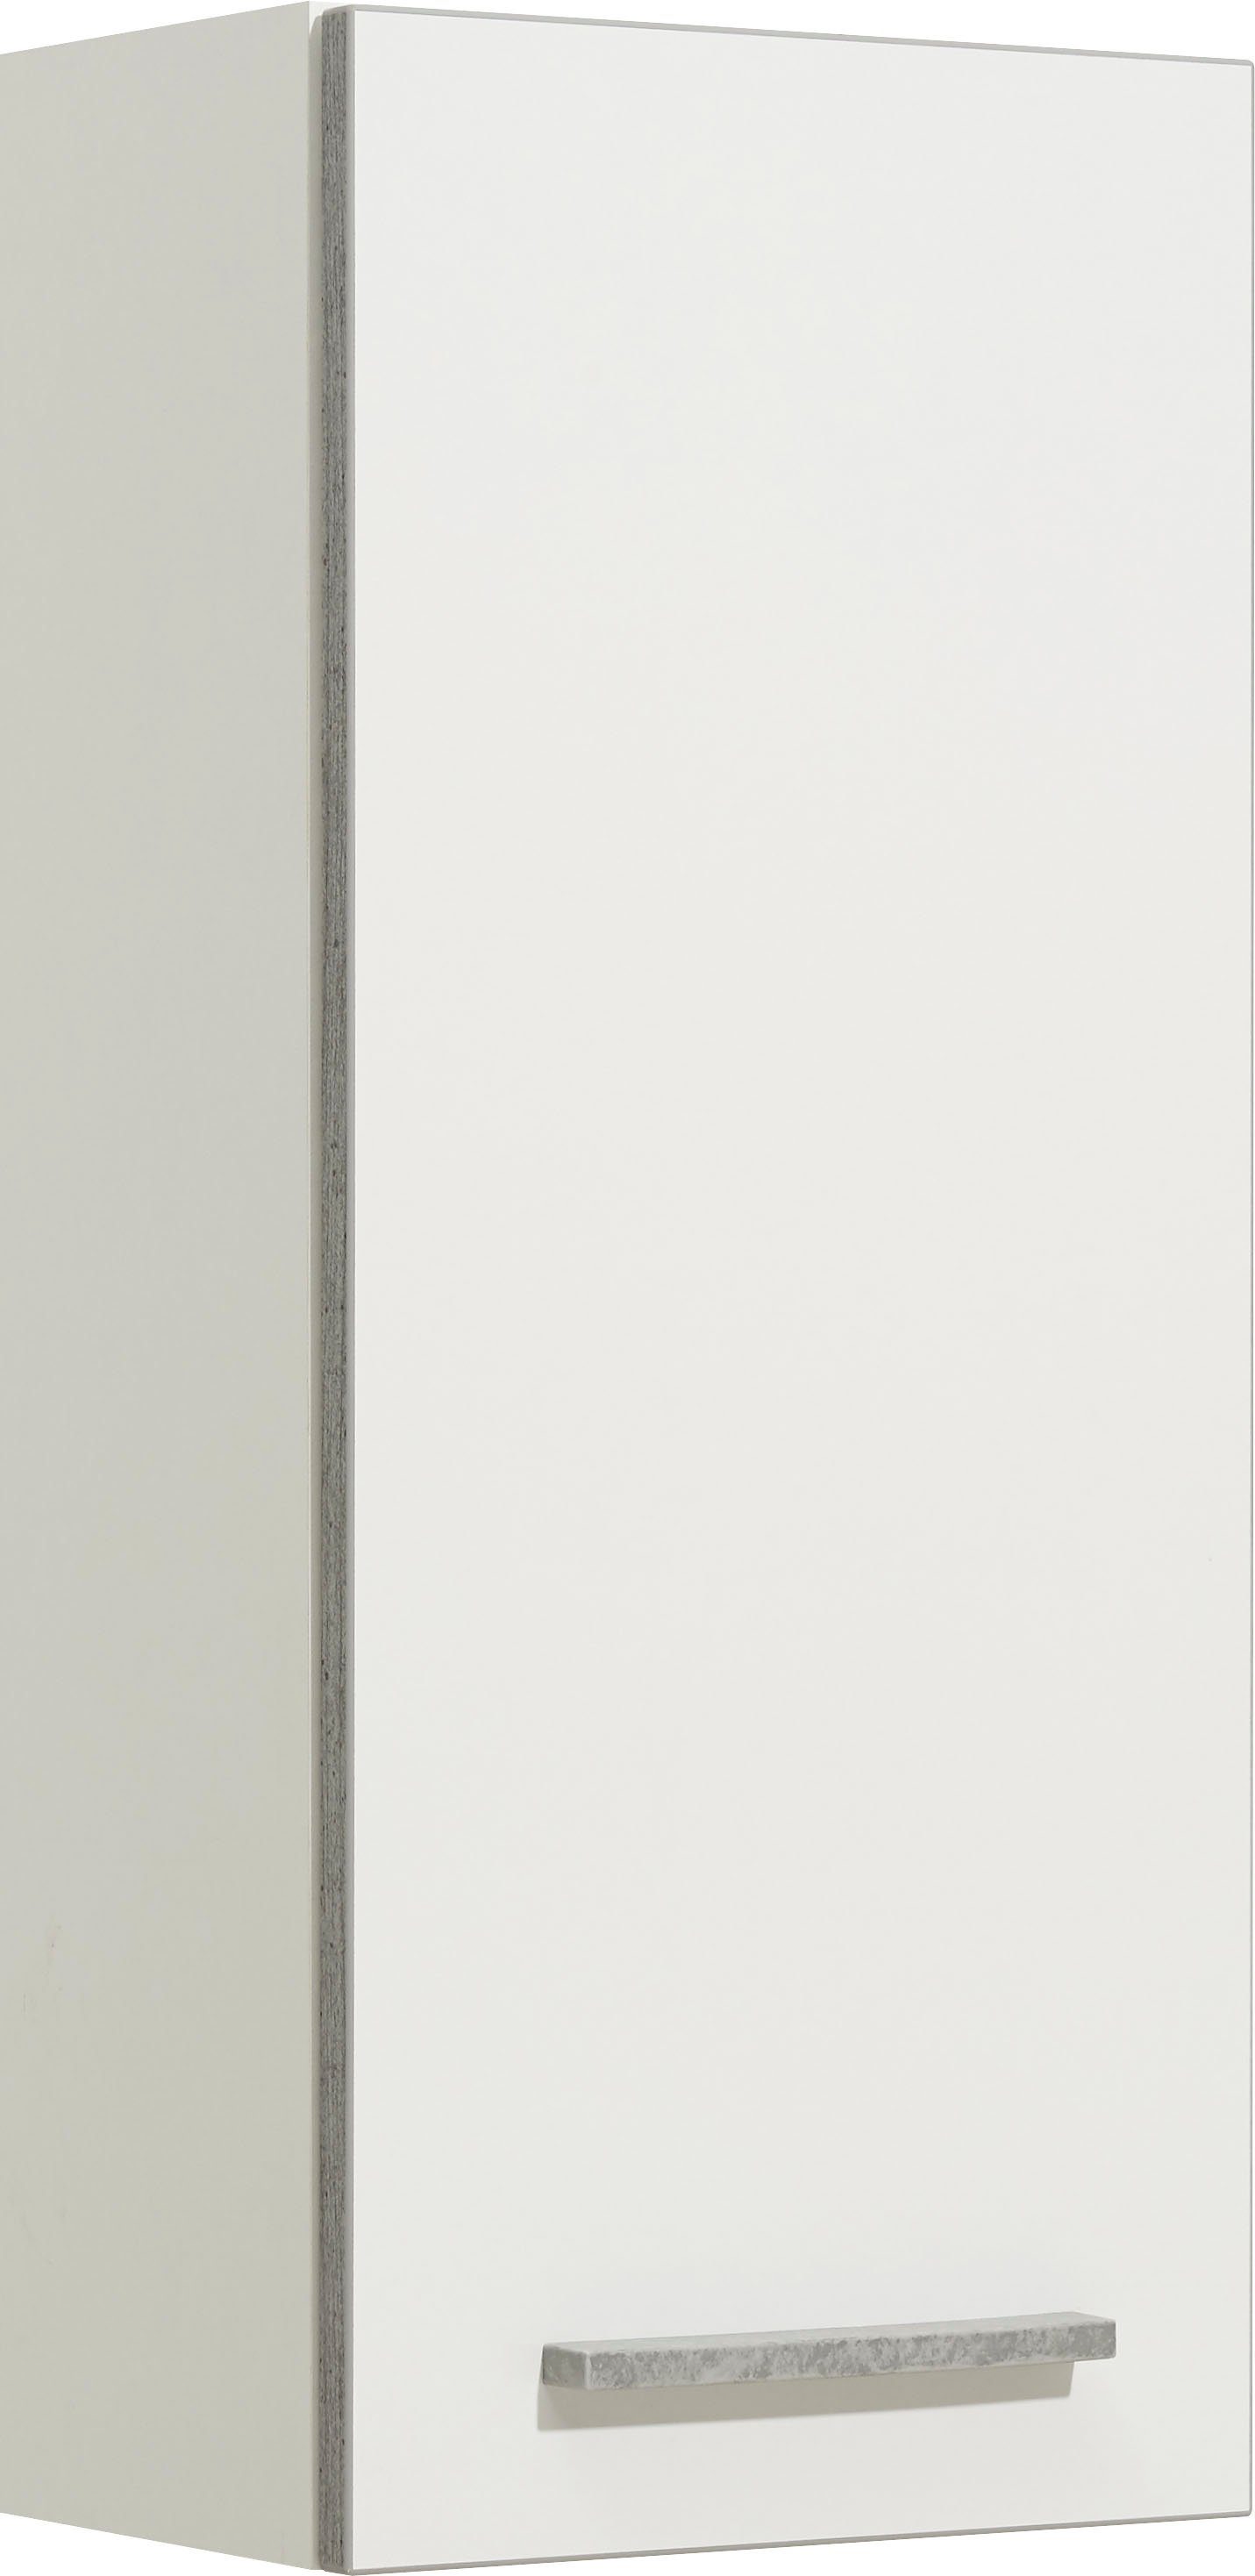 Saphir Hangend kastje Quickset 953 Breedte 30 cm, 2 losse planken, garnering in beton-look